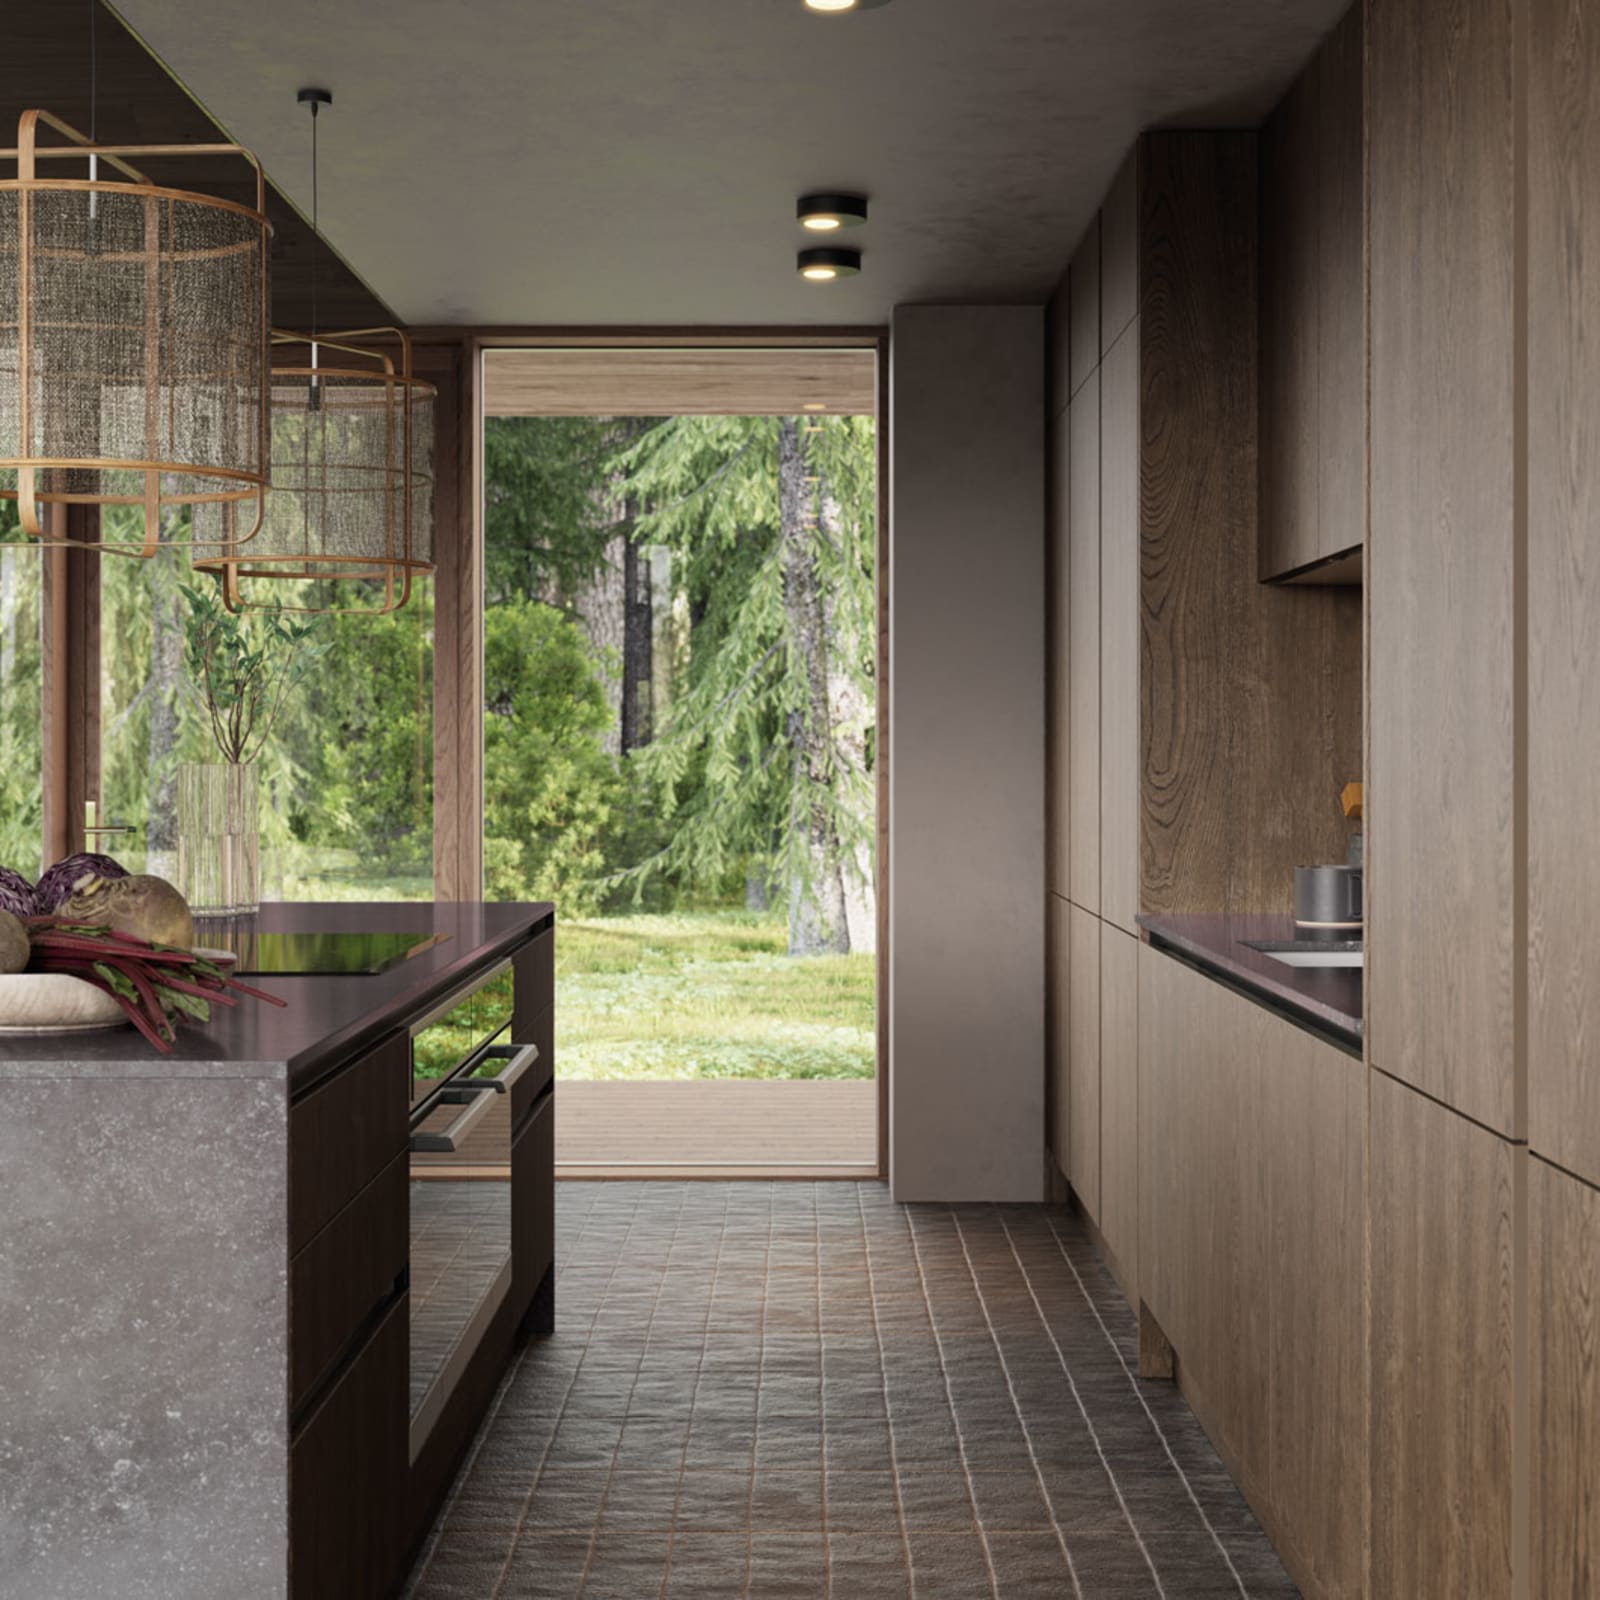 Integra Nordic Nature. Modern kitchen concept with a sleek handless design and fluted oak effect wood doors